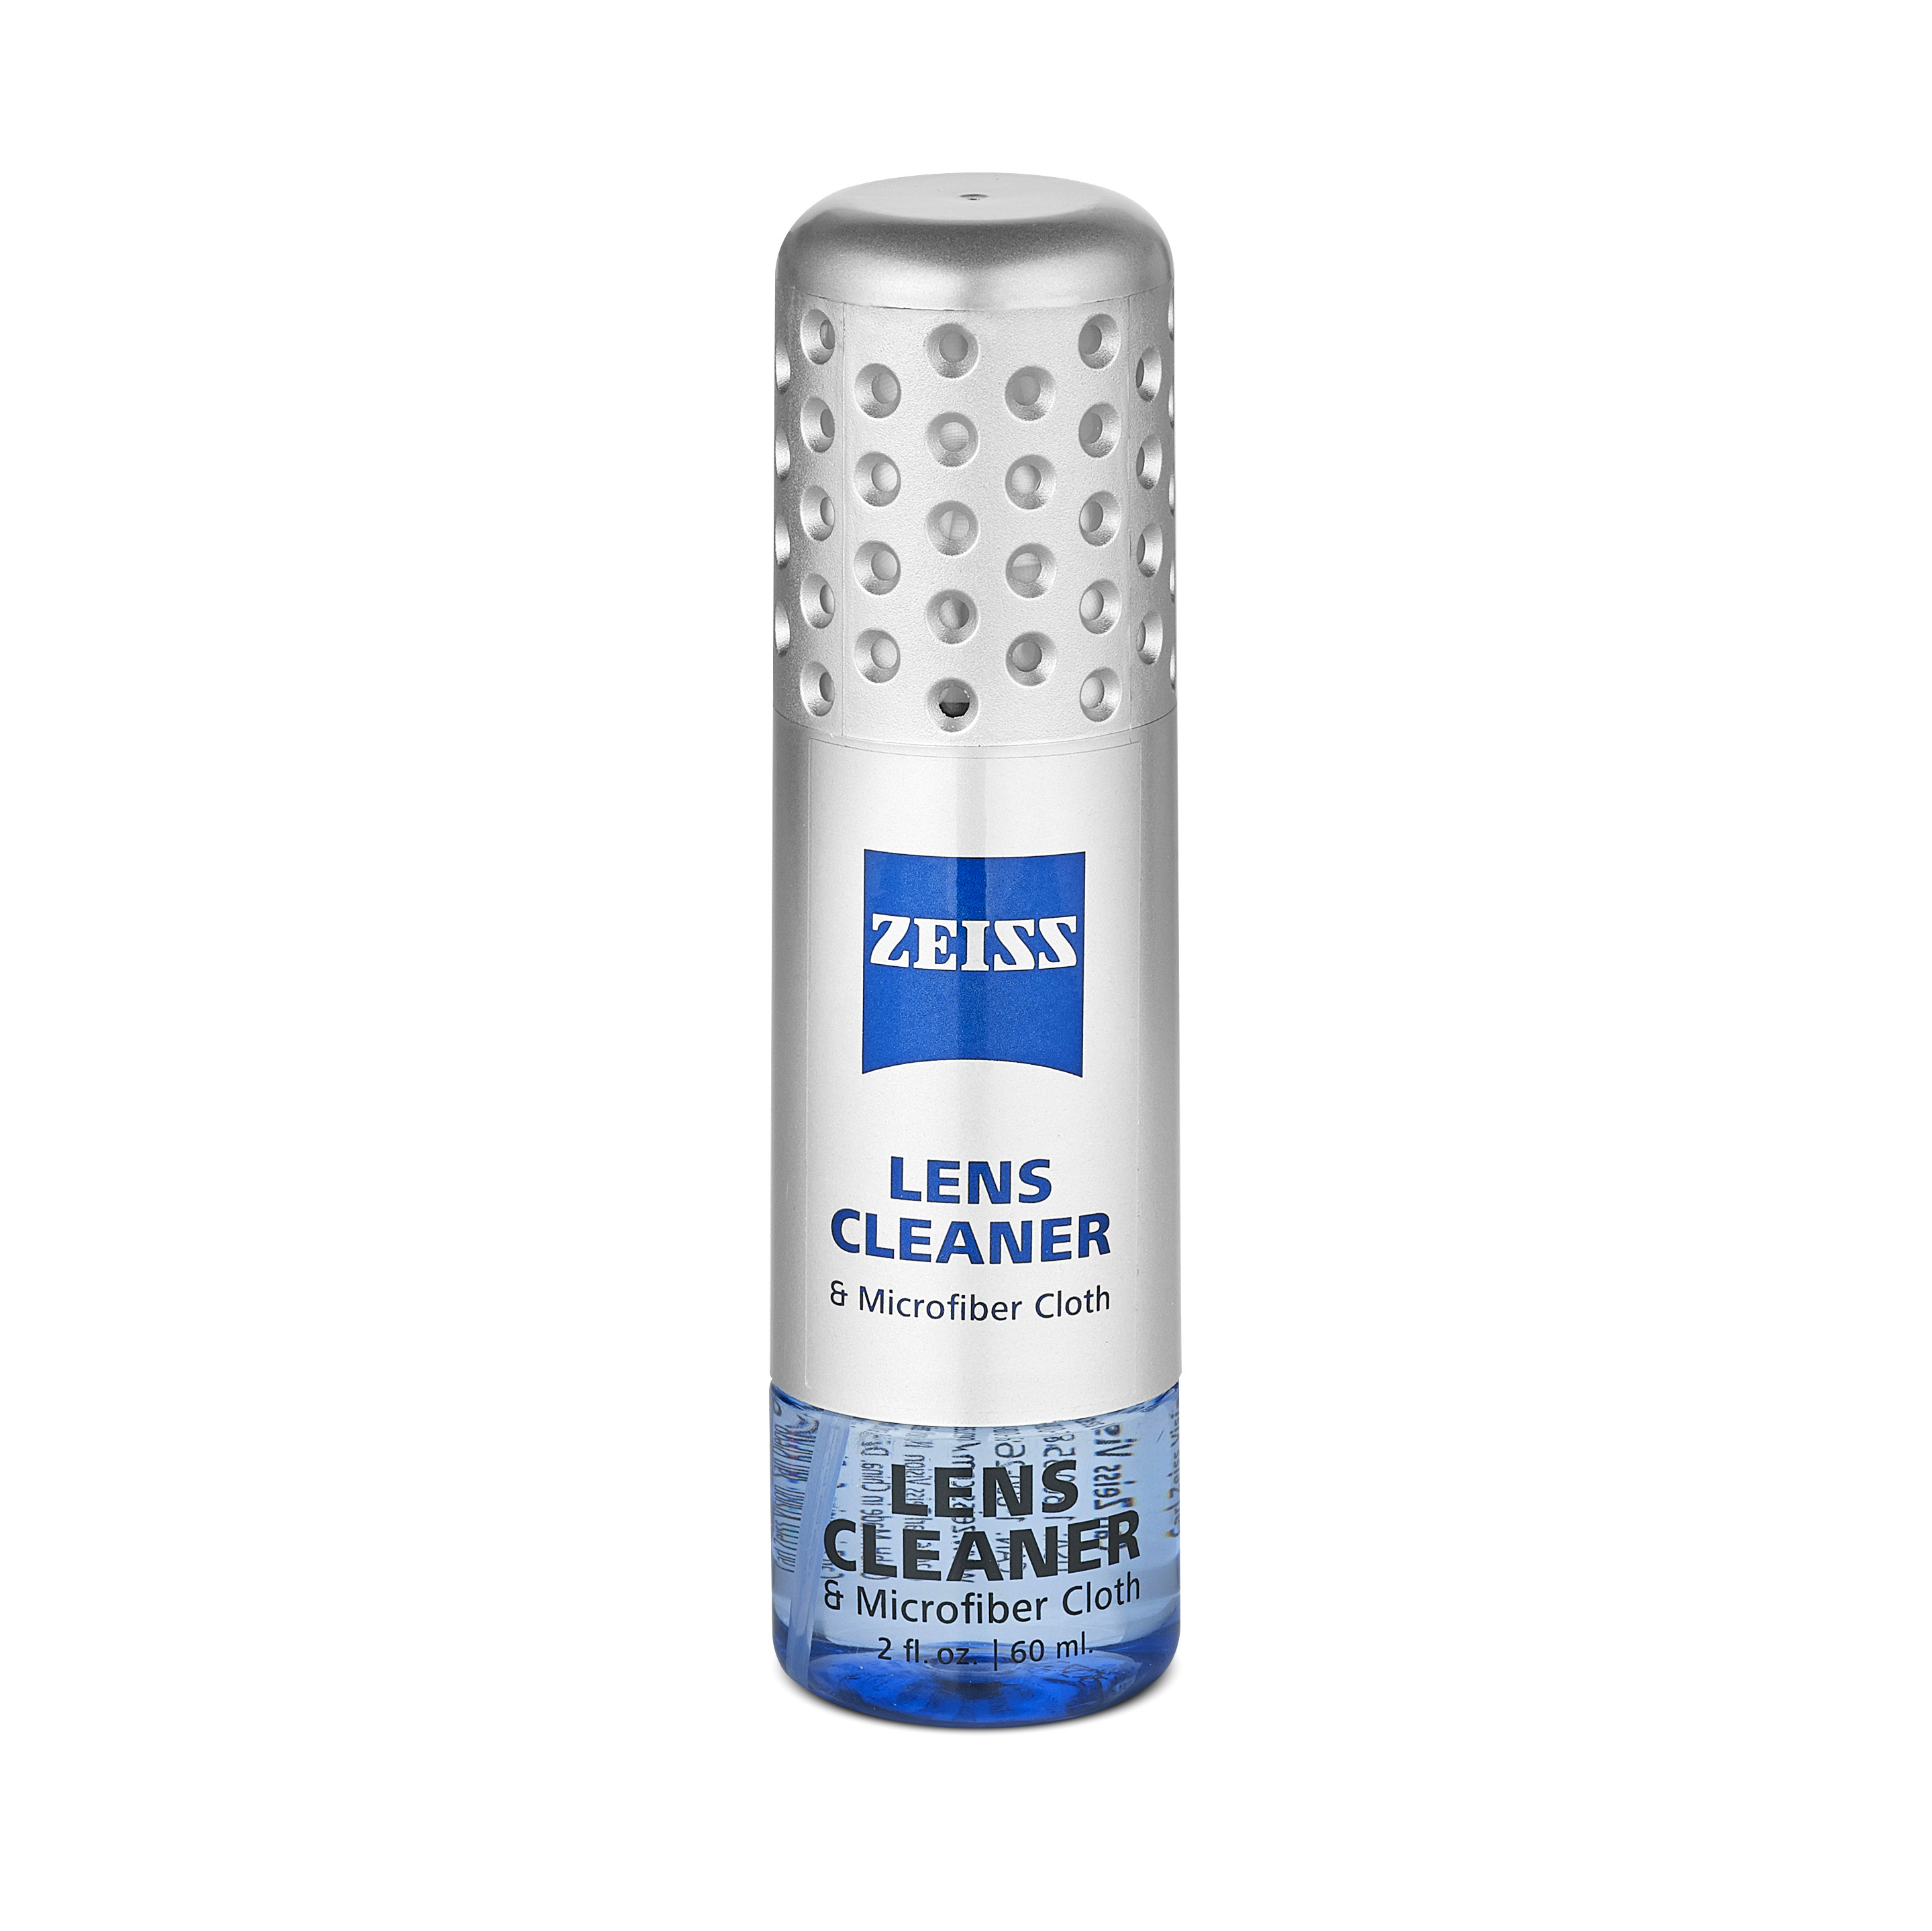 Zeiss Spray Nettoyant Optique 30ml + Tissu Microfibre